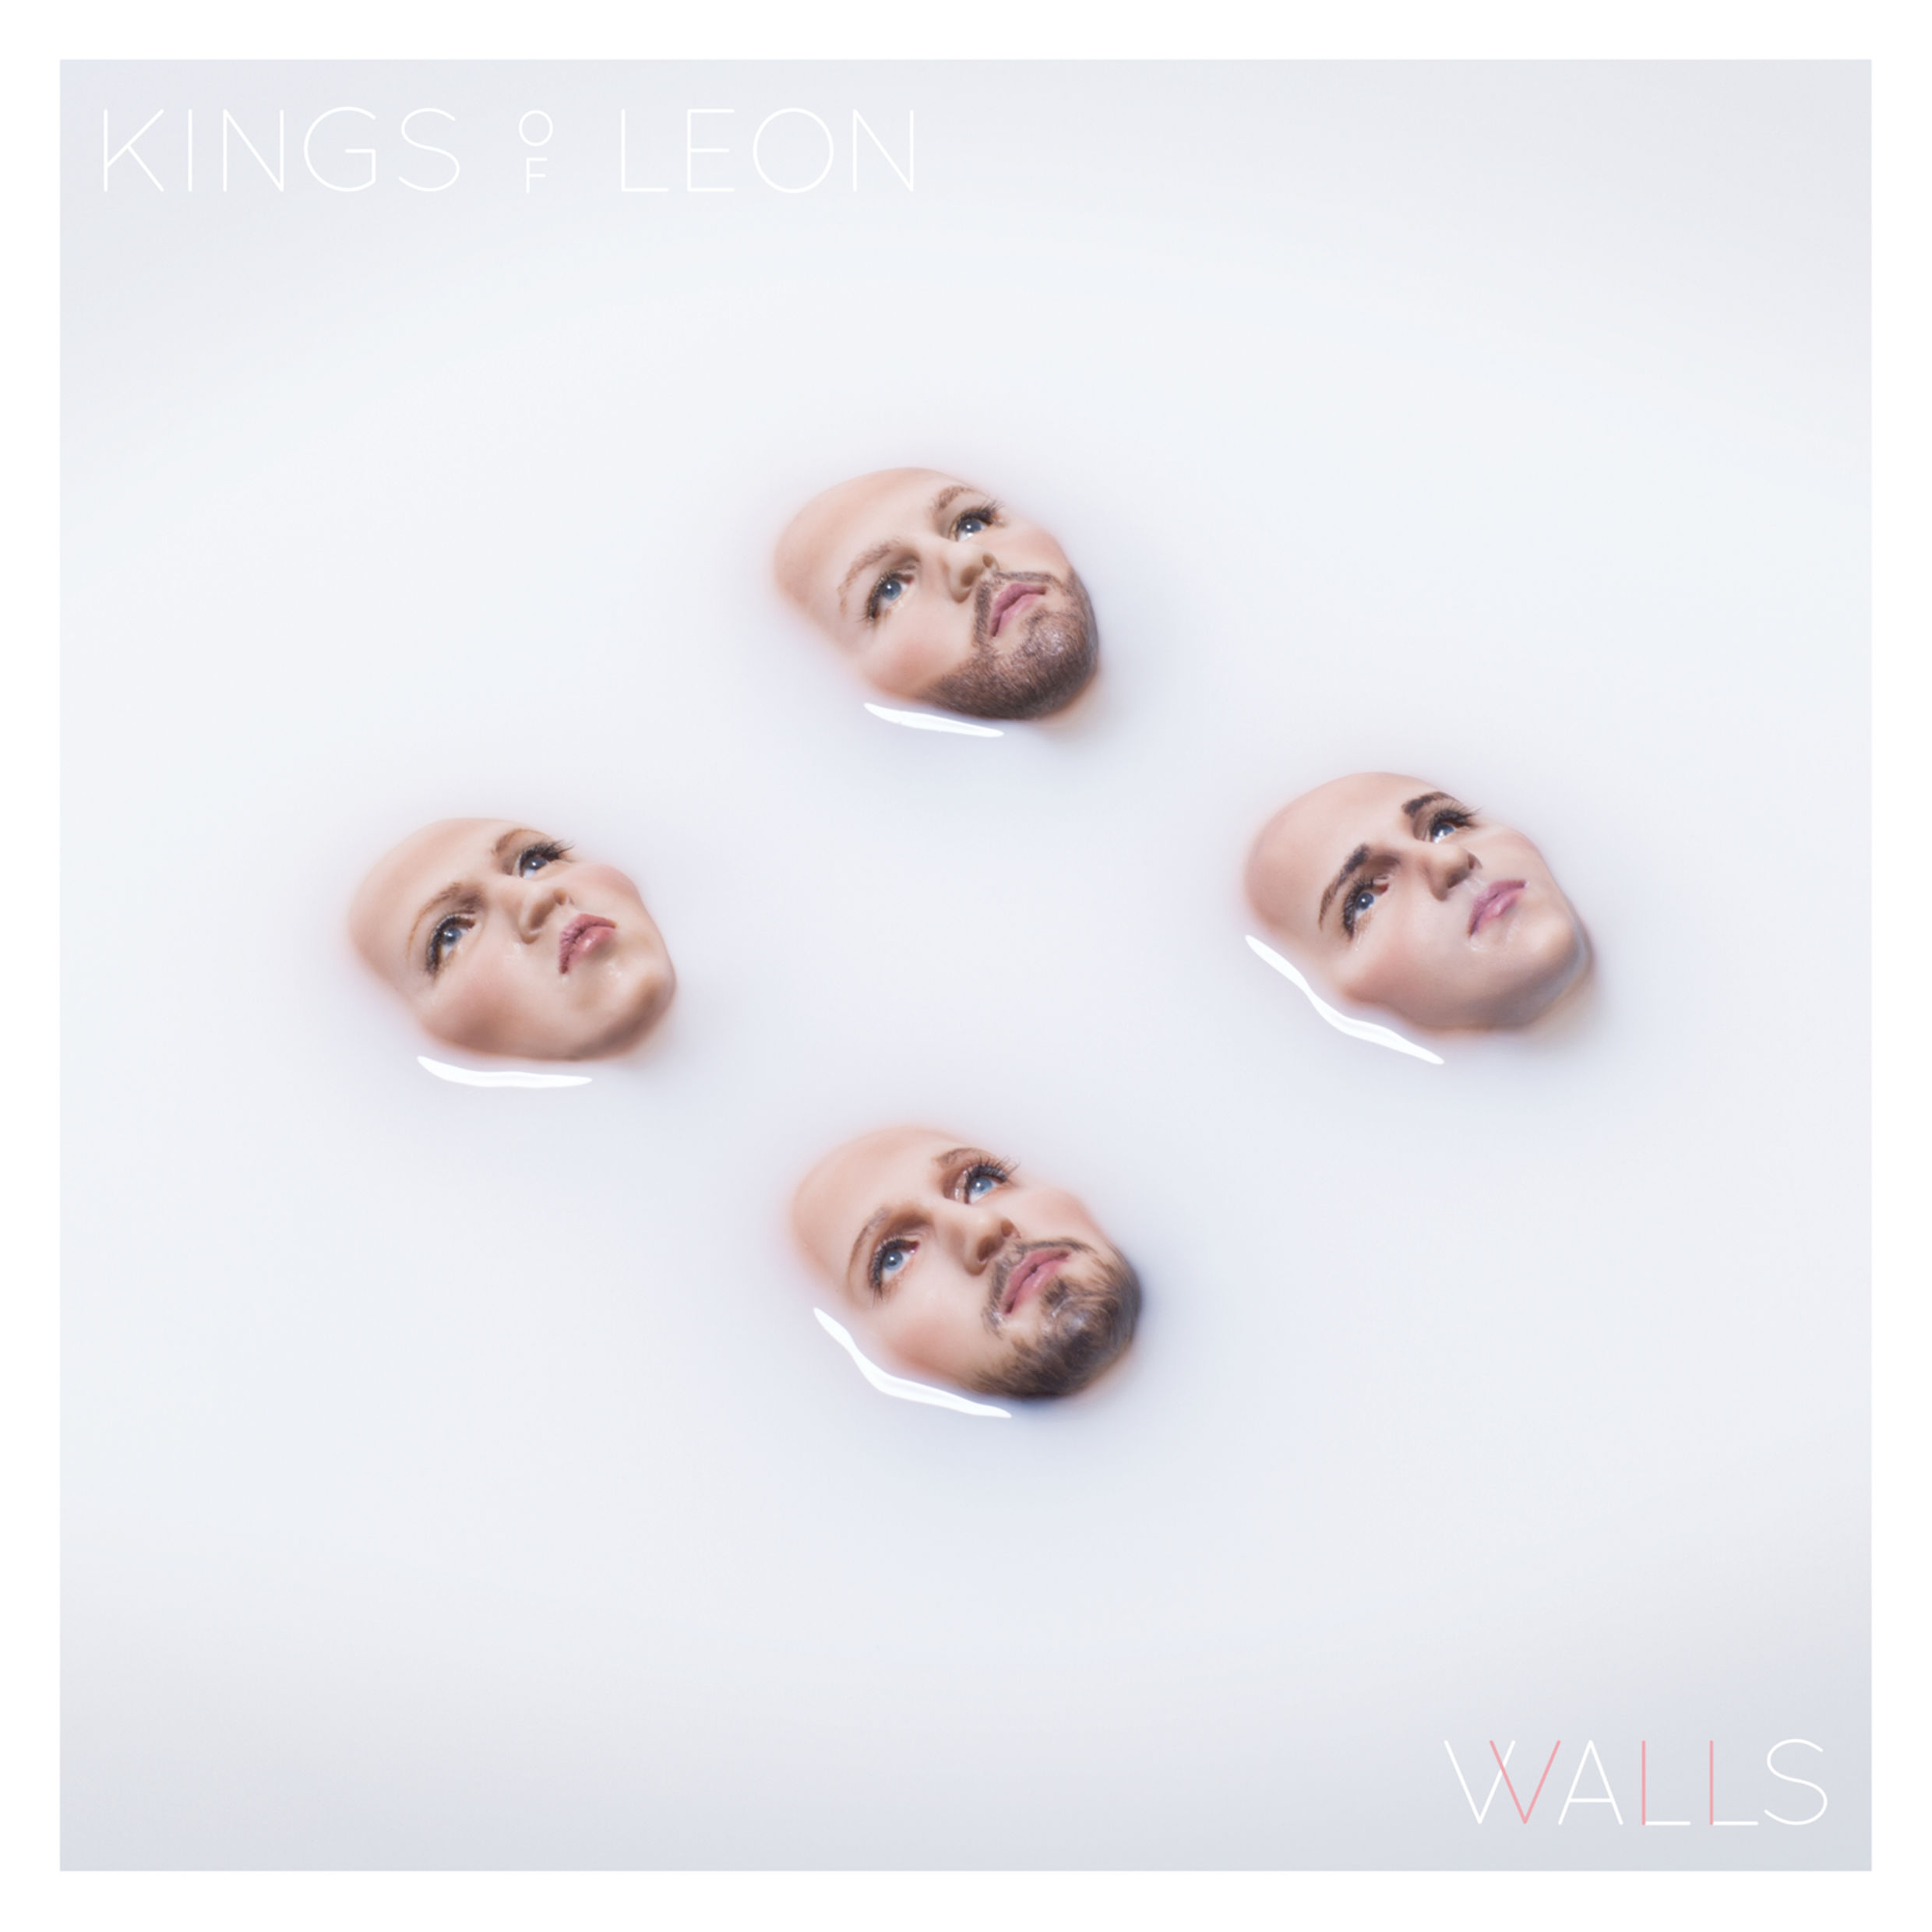 Kings Of Leon - Walls (2016) Album Info